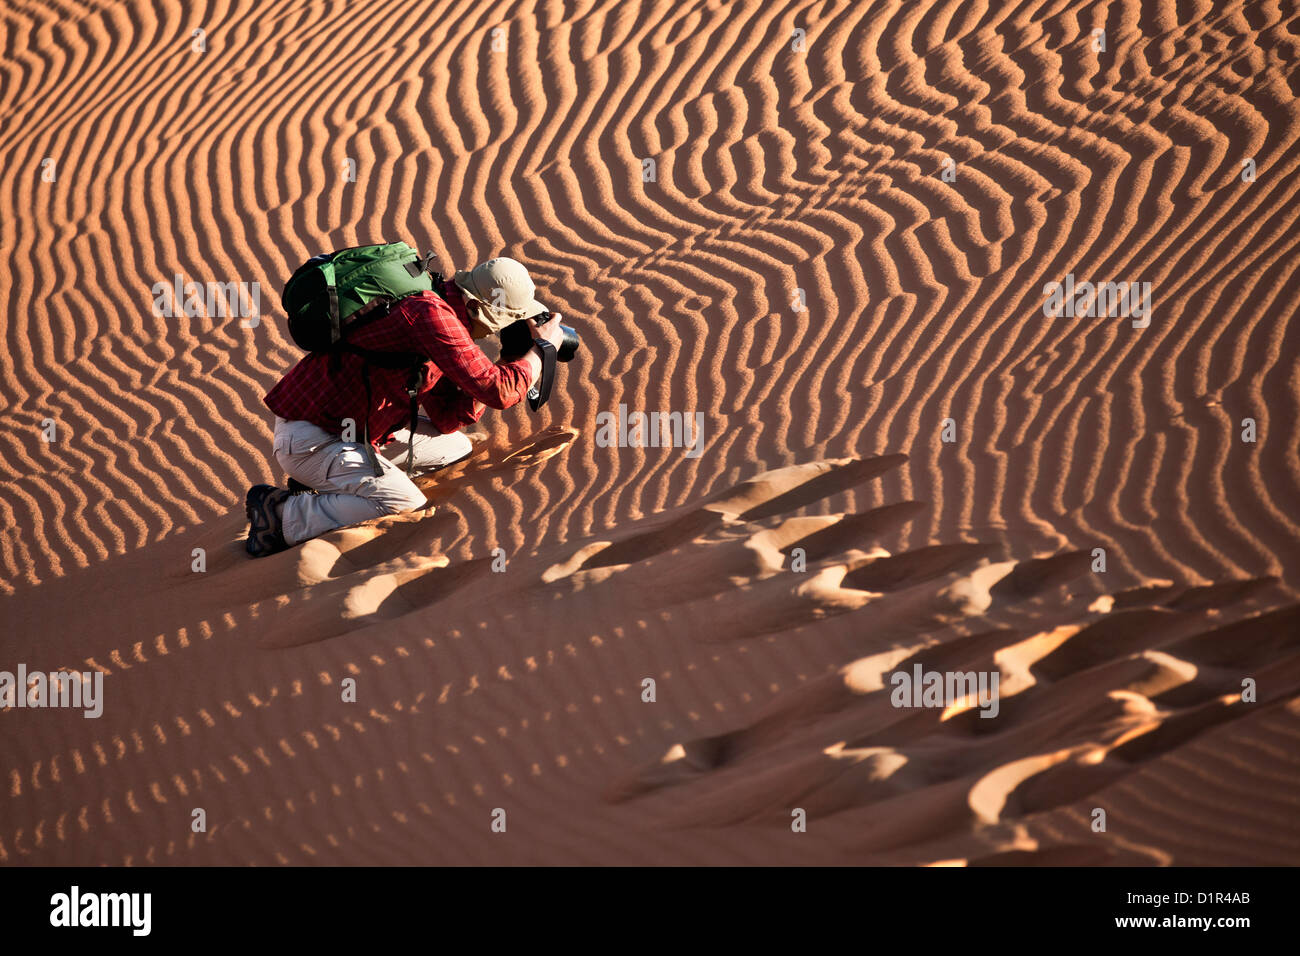 Marokko, M'Hamid, Erg Chigaga Sanddünen. Sahara. Fotograf Frans Lemmens, Bild von Sand-Wellen. Stockfoto